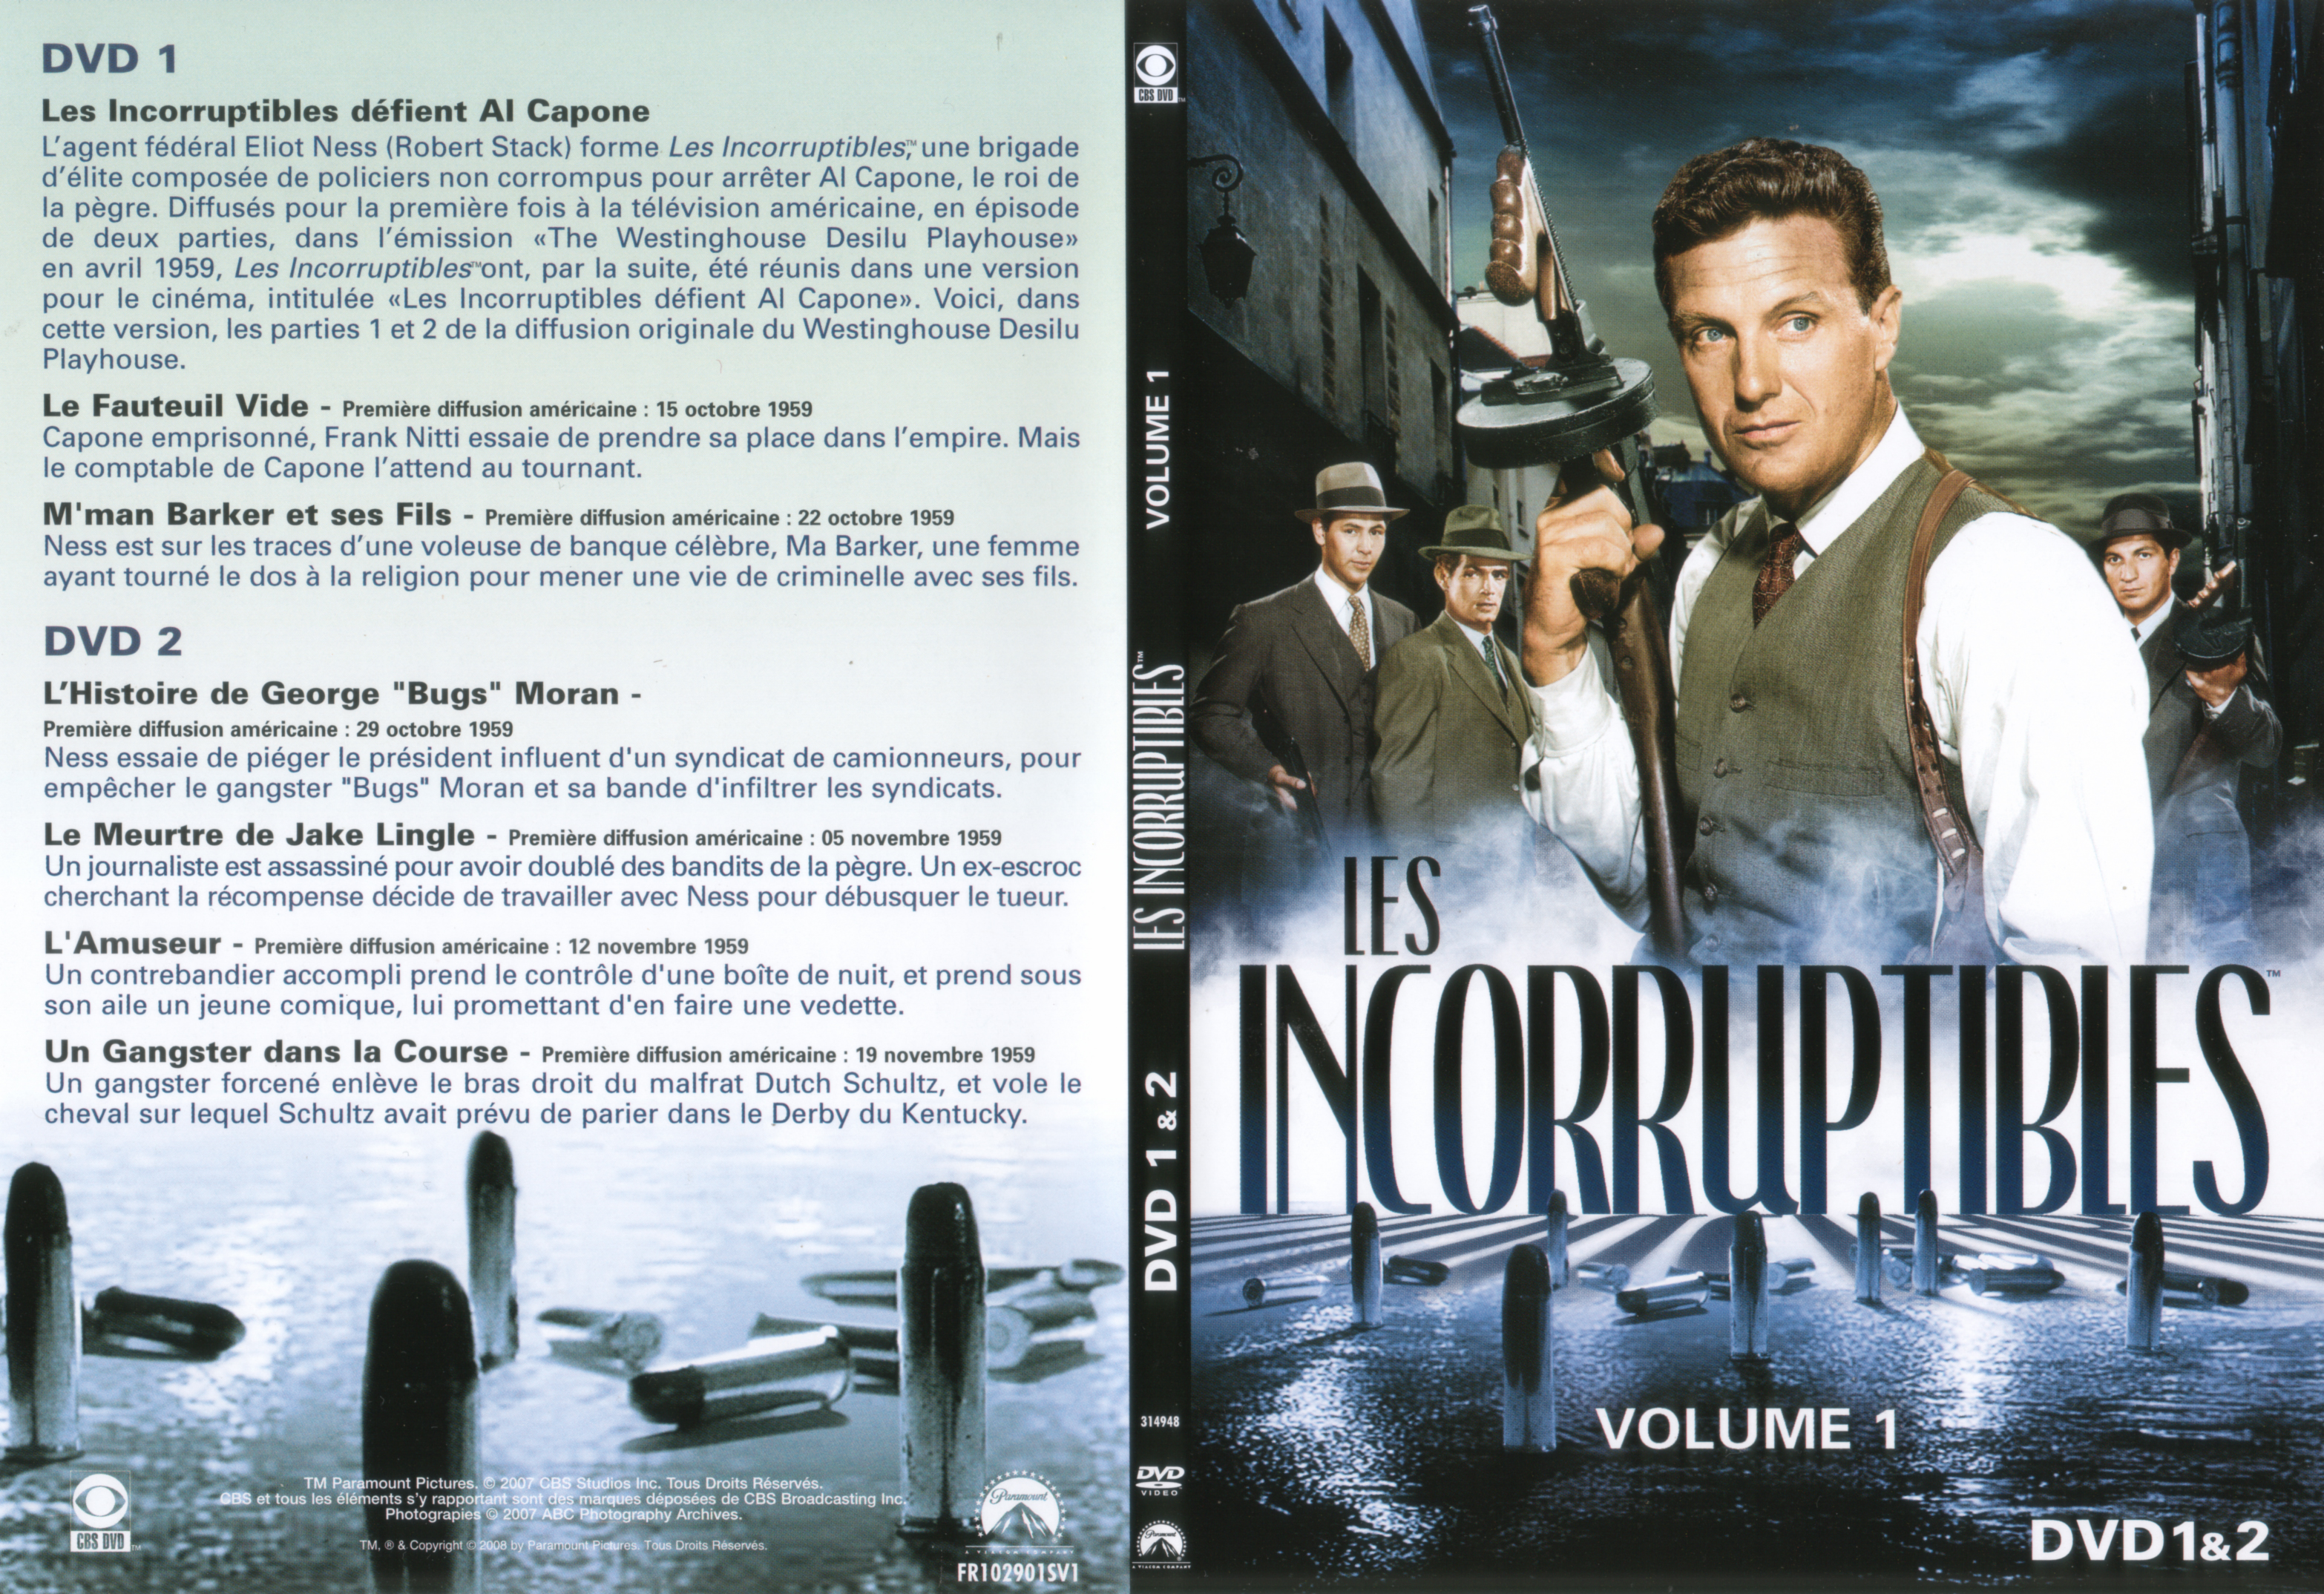 Jaquette DVD Les incorruptibles vol 01 DVD 1